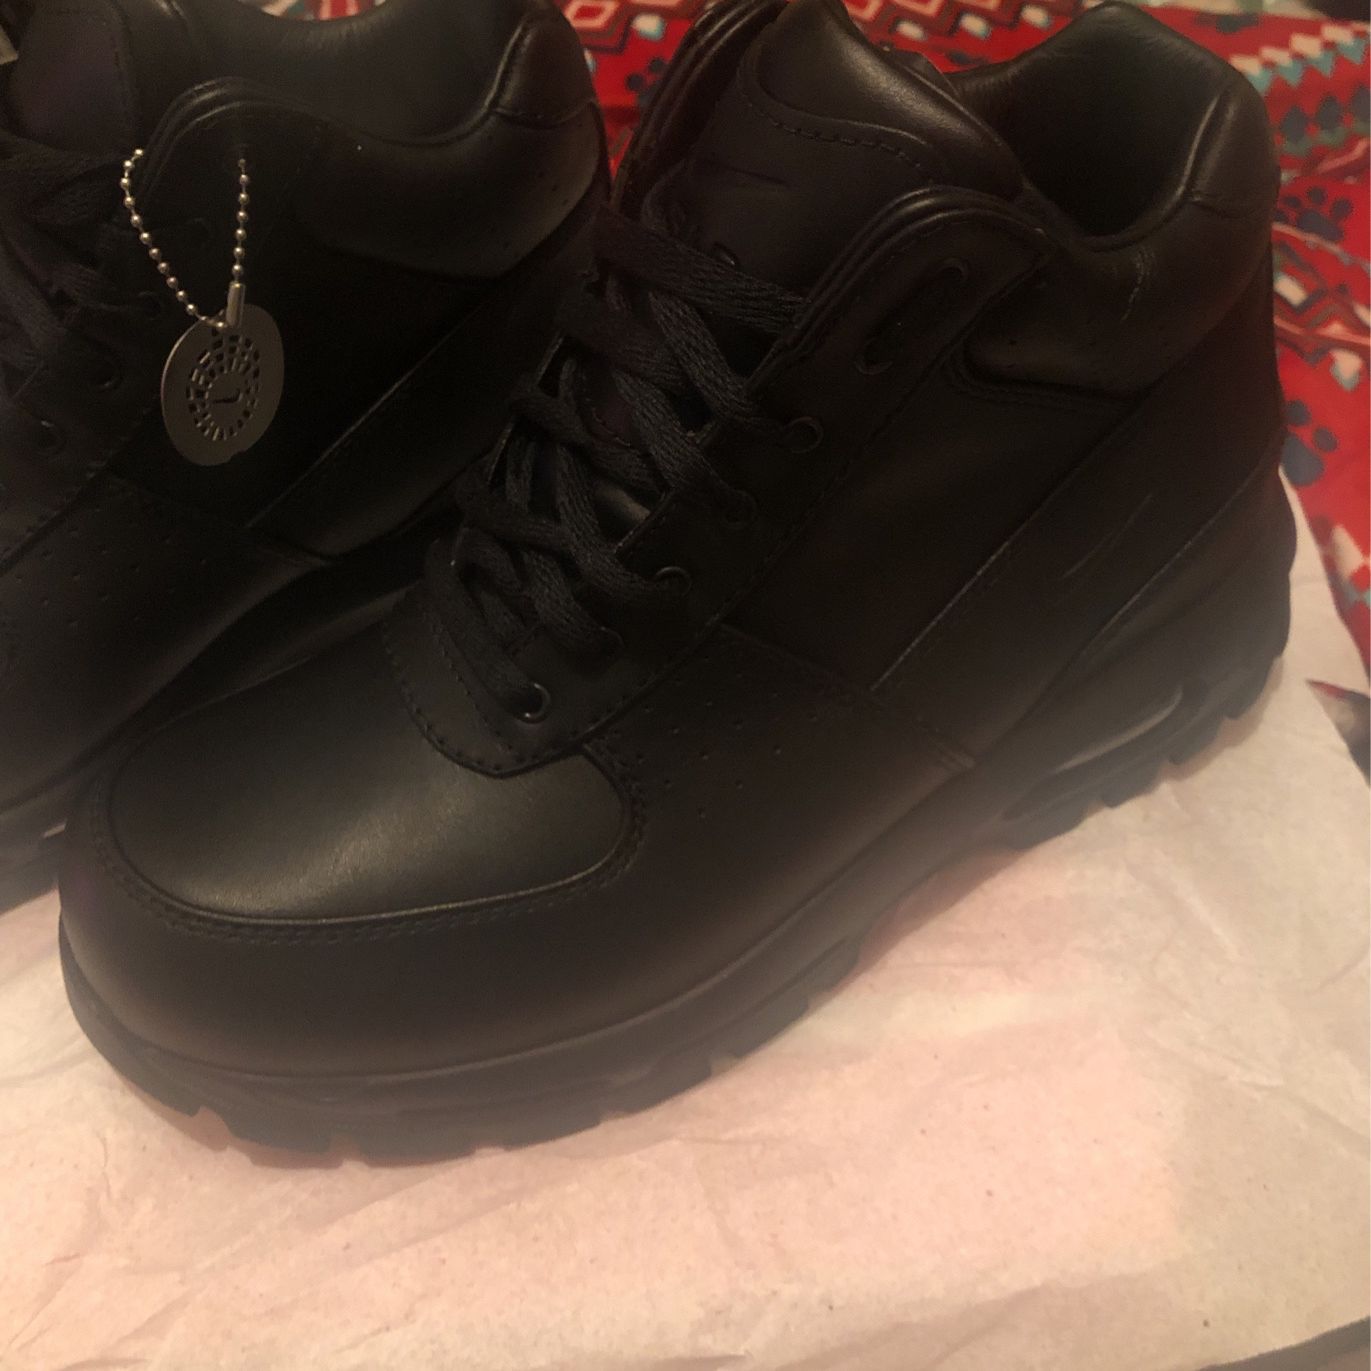 Nike Boots, Size 9, Black